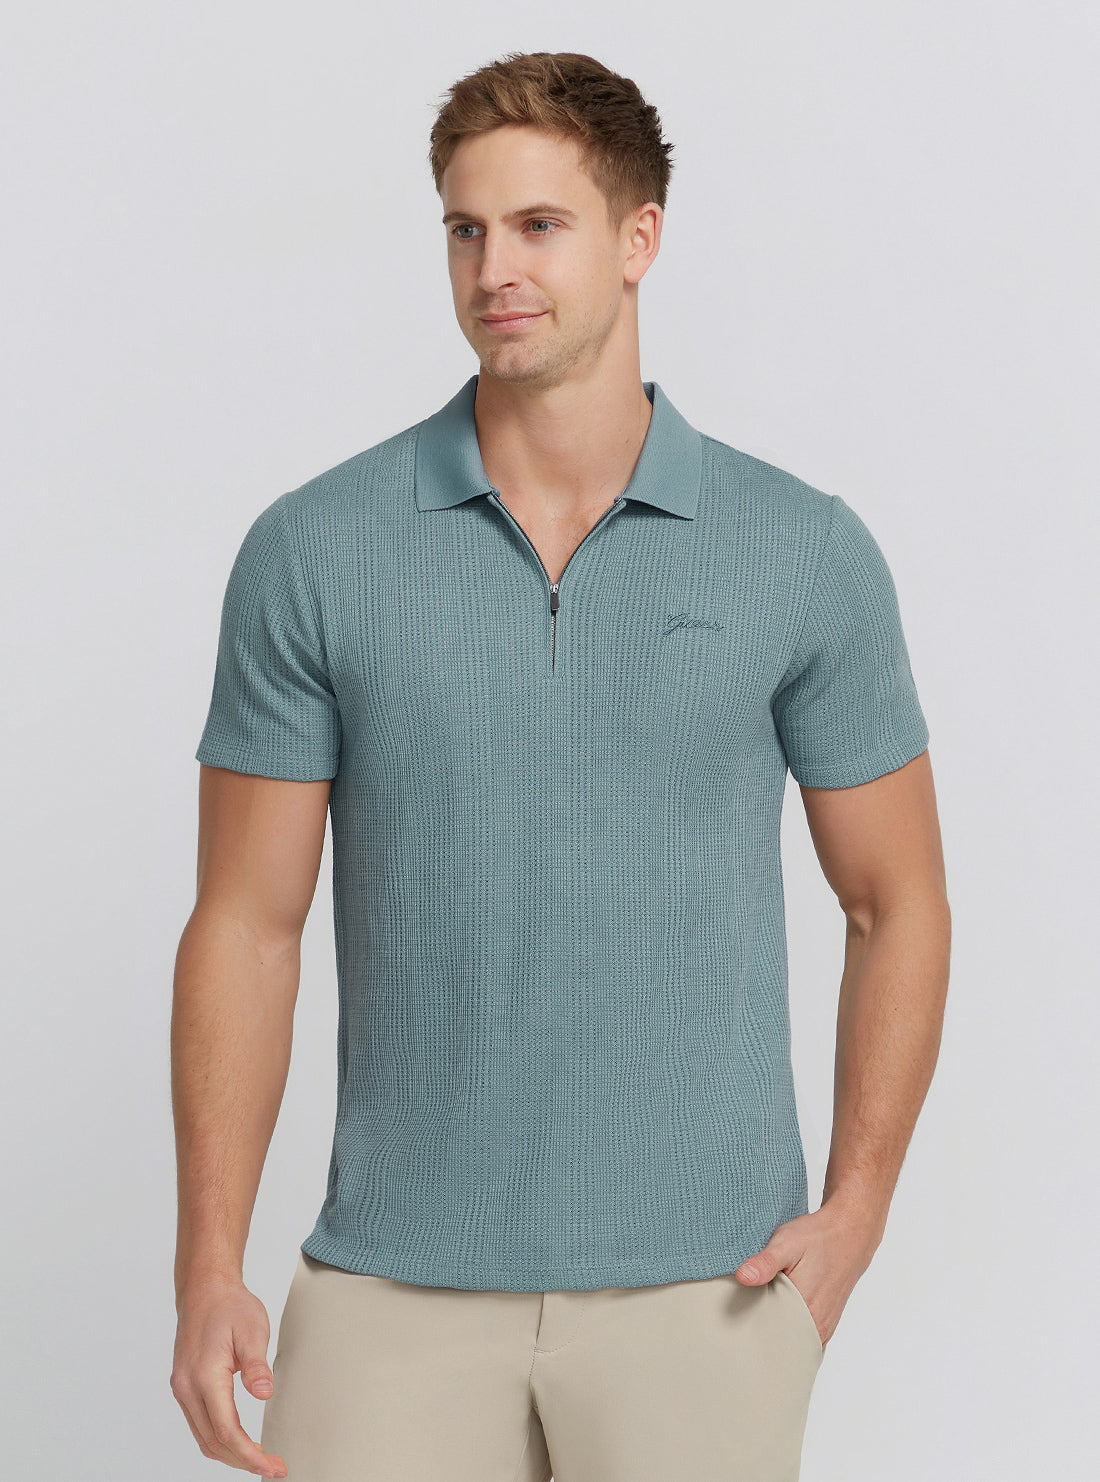 Blue Joshua Knit Shirt | GUESS Men's | Front view